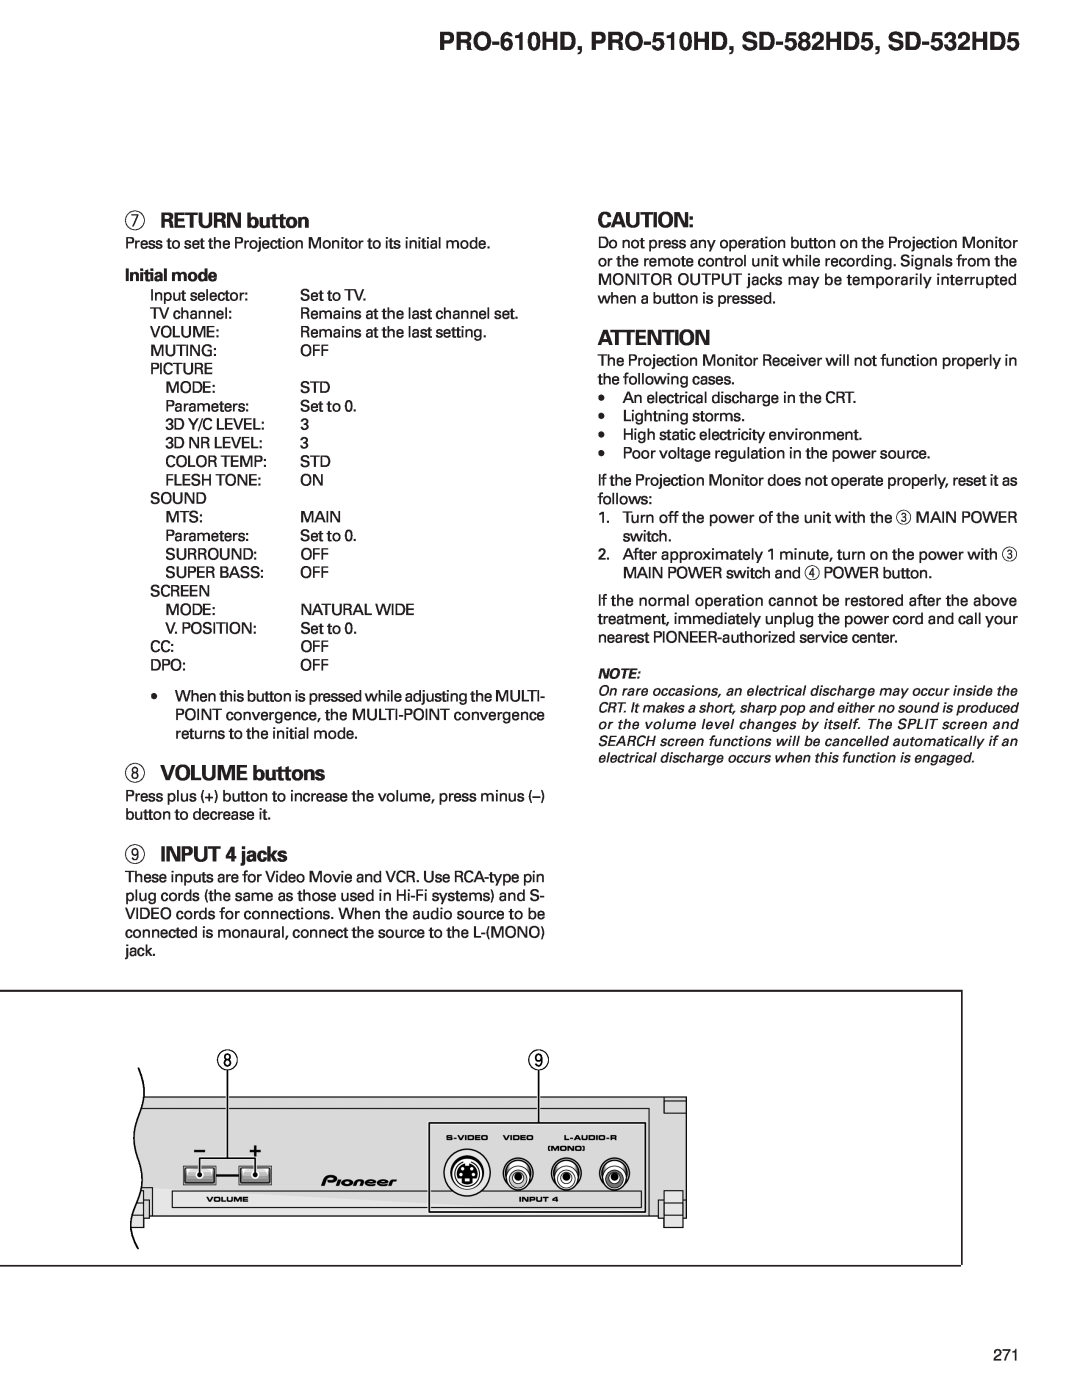 Pioneer RETURN button, VOLUME buttons, INPUT 4 jacks, PRO-610HD, PRO-510HD, SD-582HD5, SD-532HD5, Initial mode 